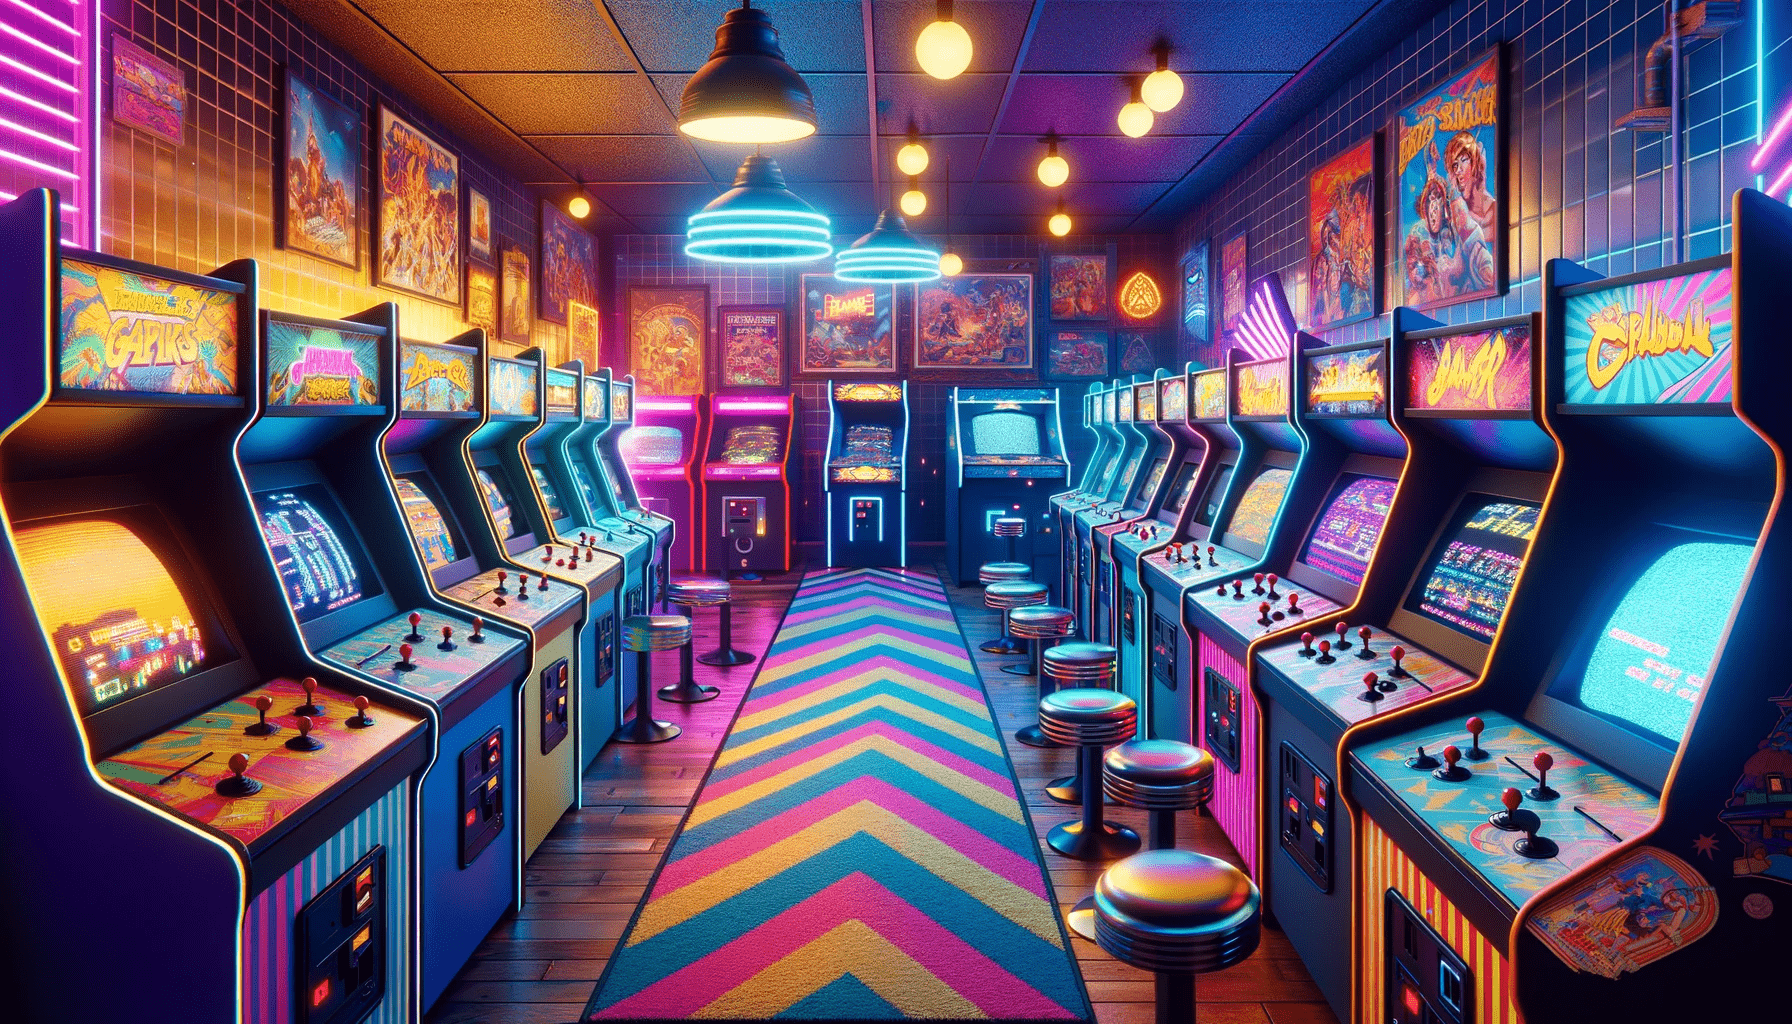 Craig Retro's Top 10 80s Arcade Games